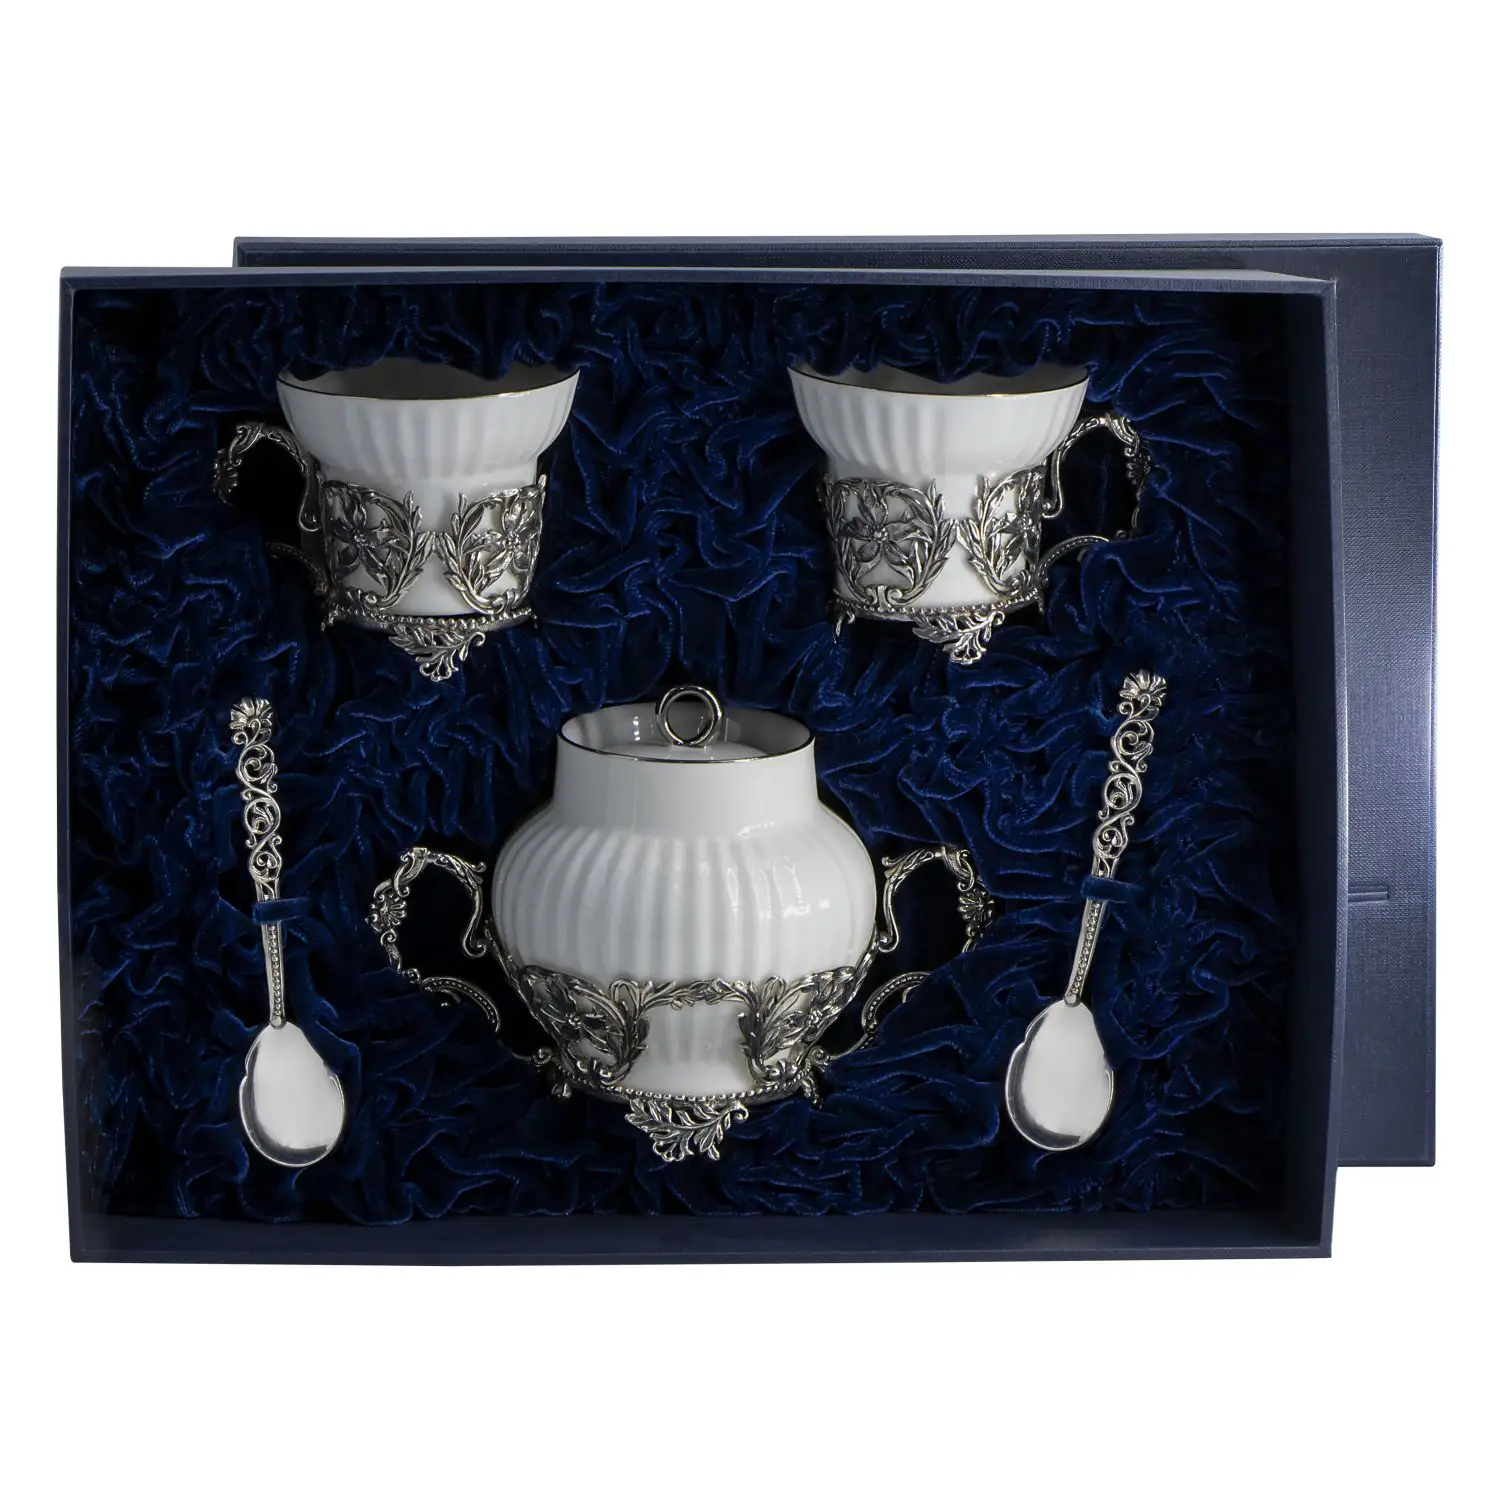 Набор Симфония: ложка, чашка, сахарница (Серебро 925) набор симфония чашка ложка чайник серебро 925